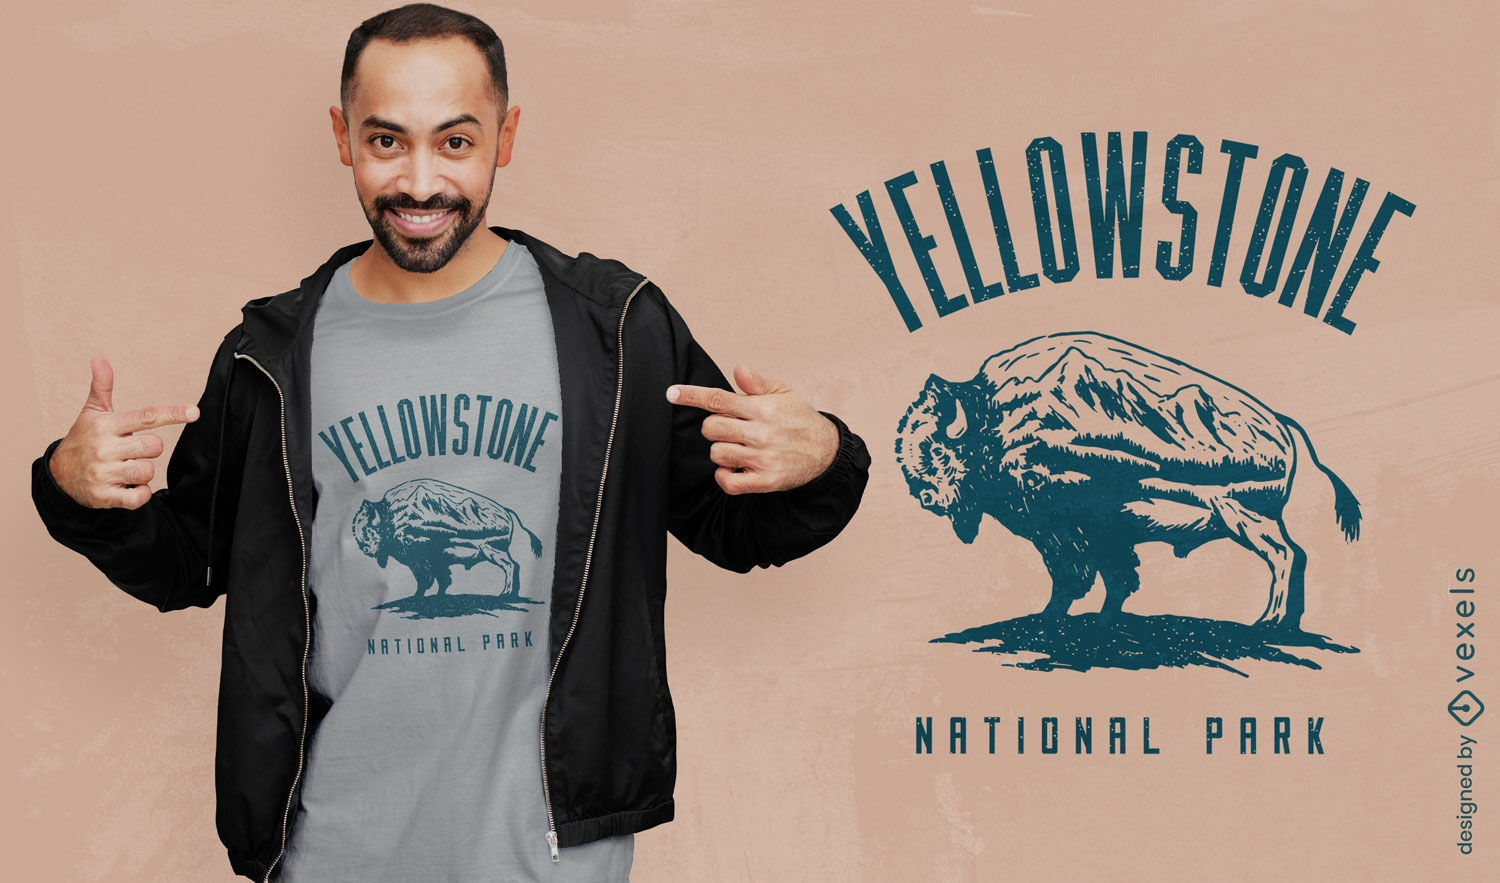 Yellowstone national park mountains t-shirt design